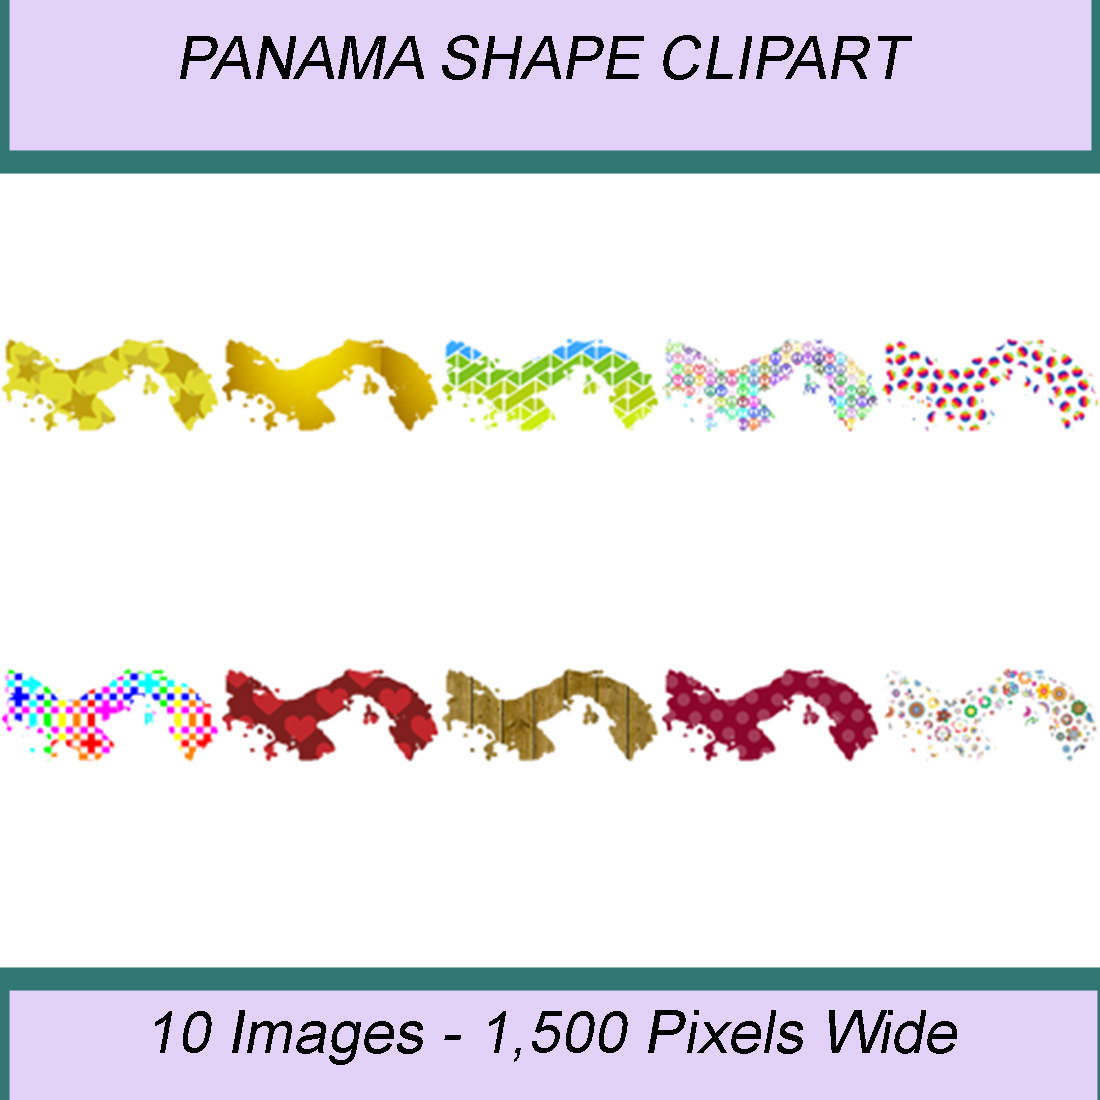 PANAMA SHAPE CLIPART ICONS cover image.